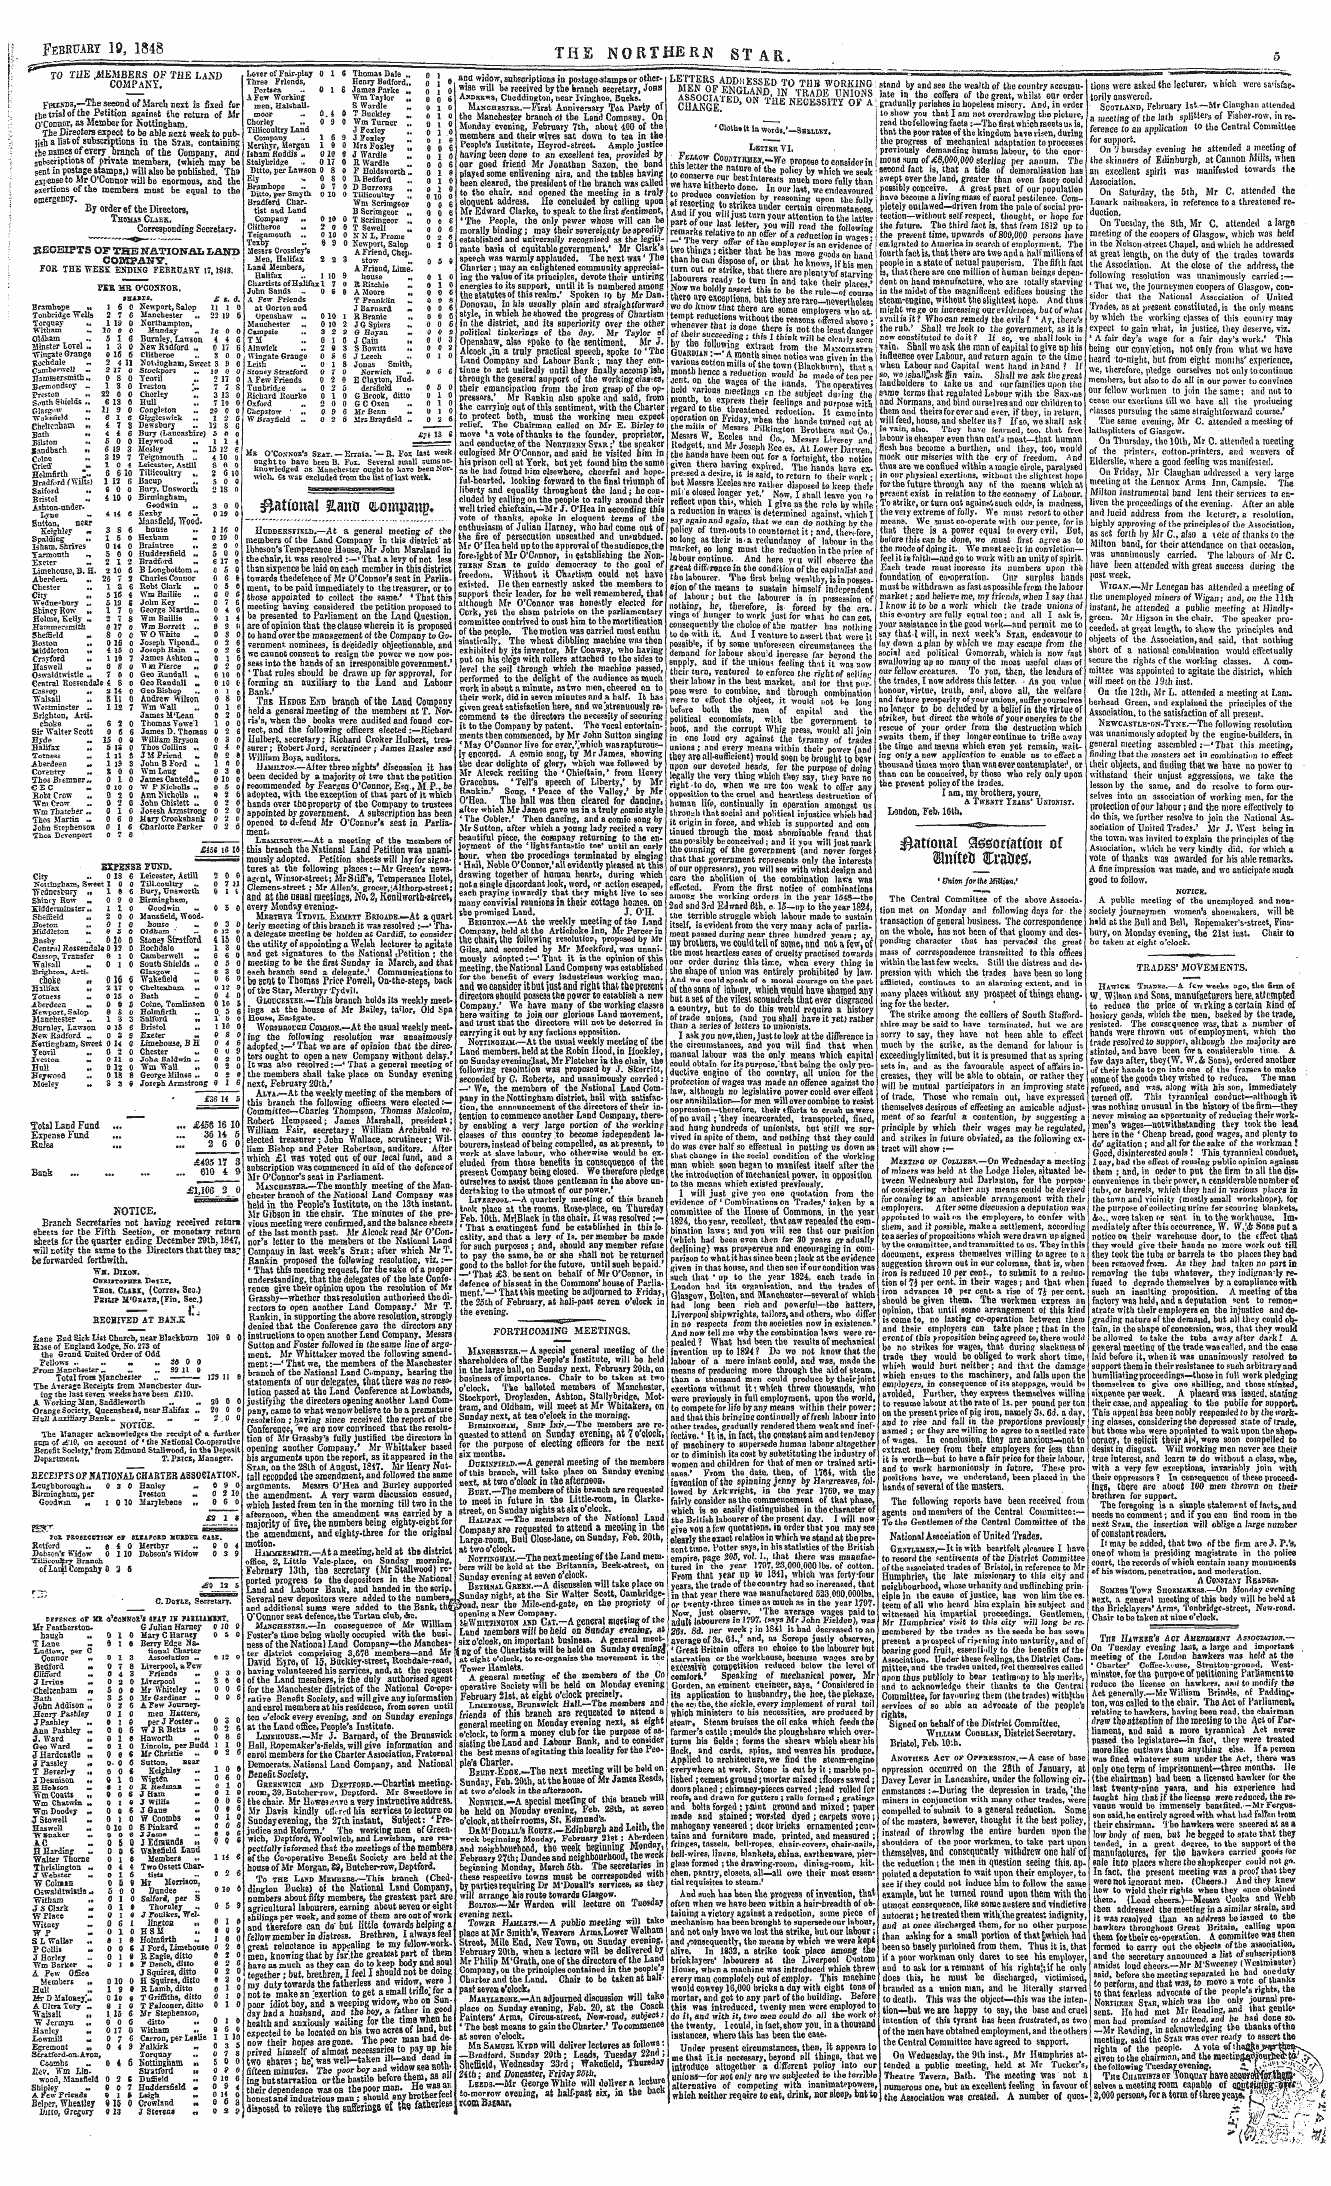 Northern Star (1837-1852): jS F Y, 3rd edition - 0 16 Thomas February 19, 1848 Tlis North...